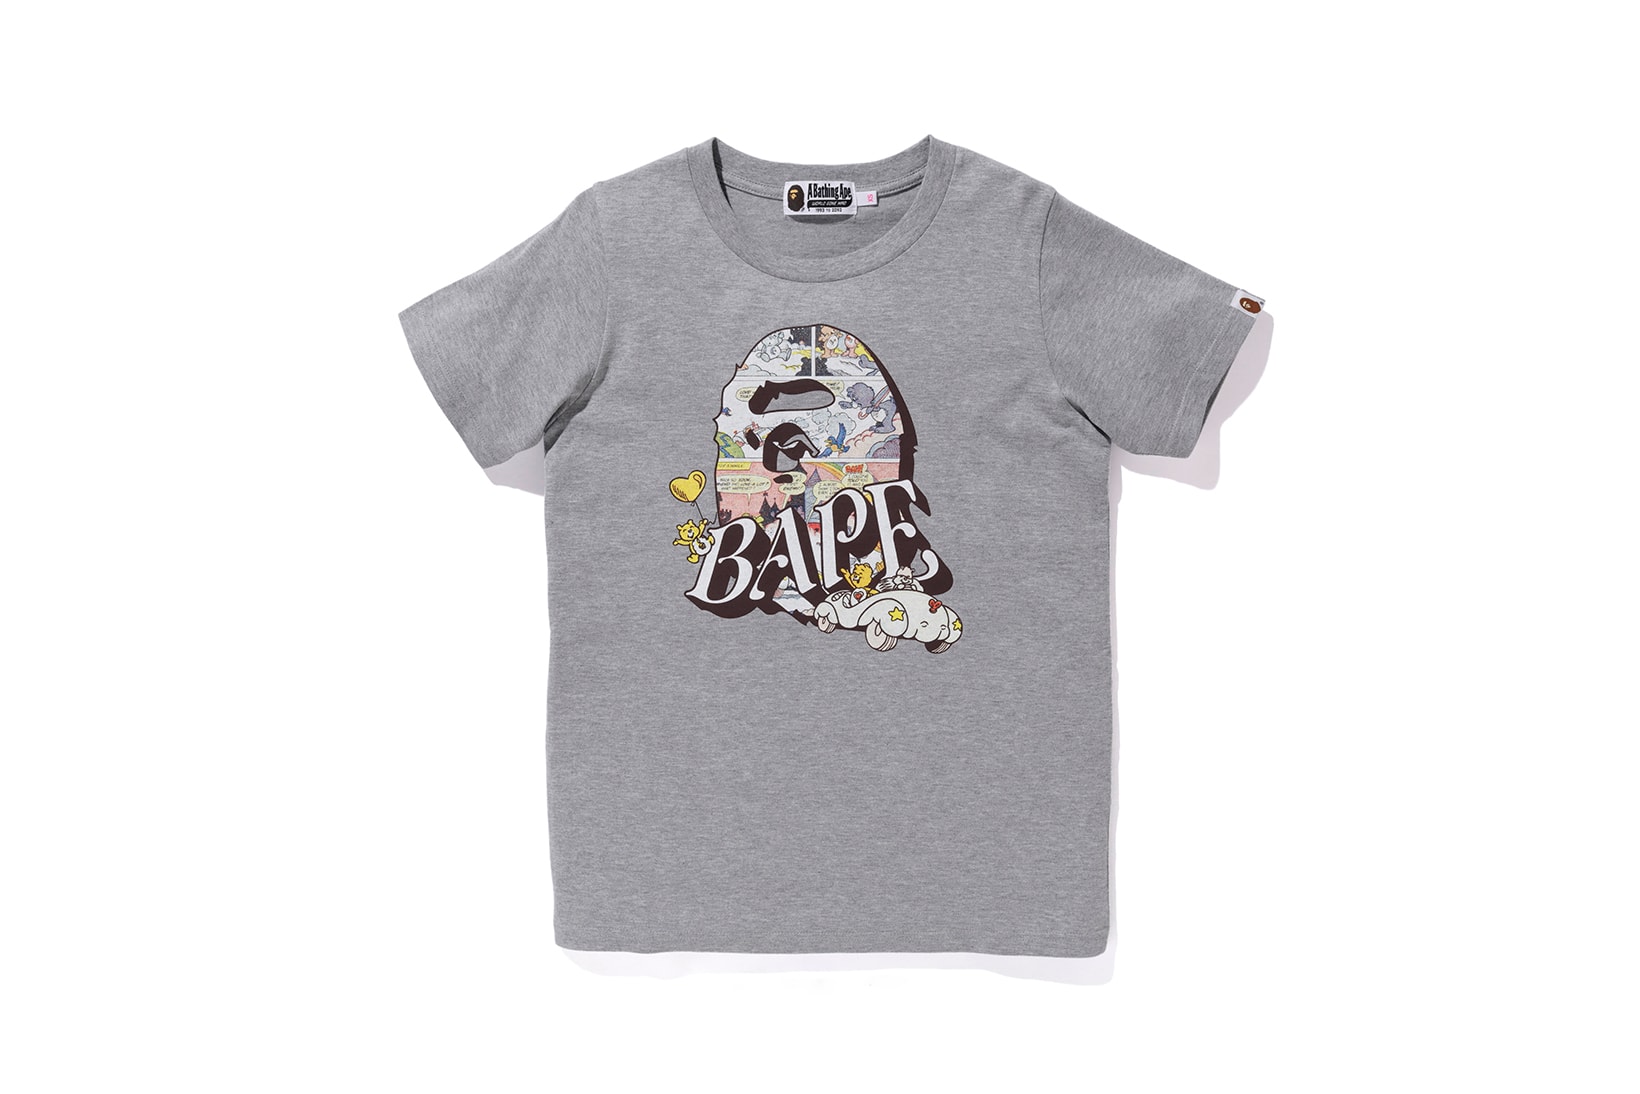 Care Bears x BAPE Collection Logo T-Shirt White